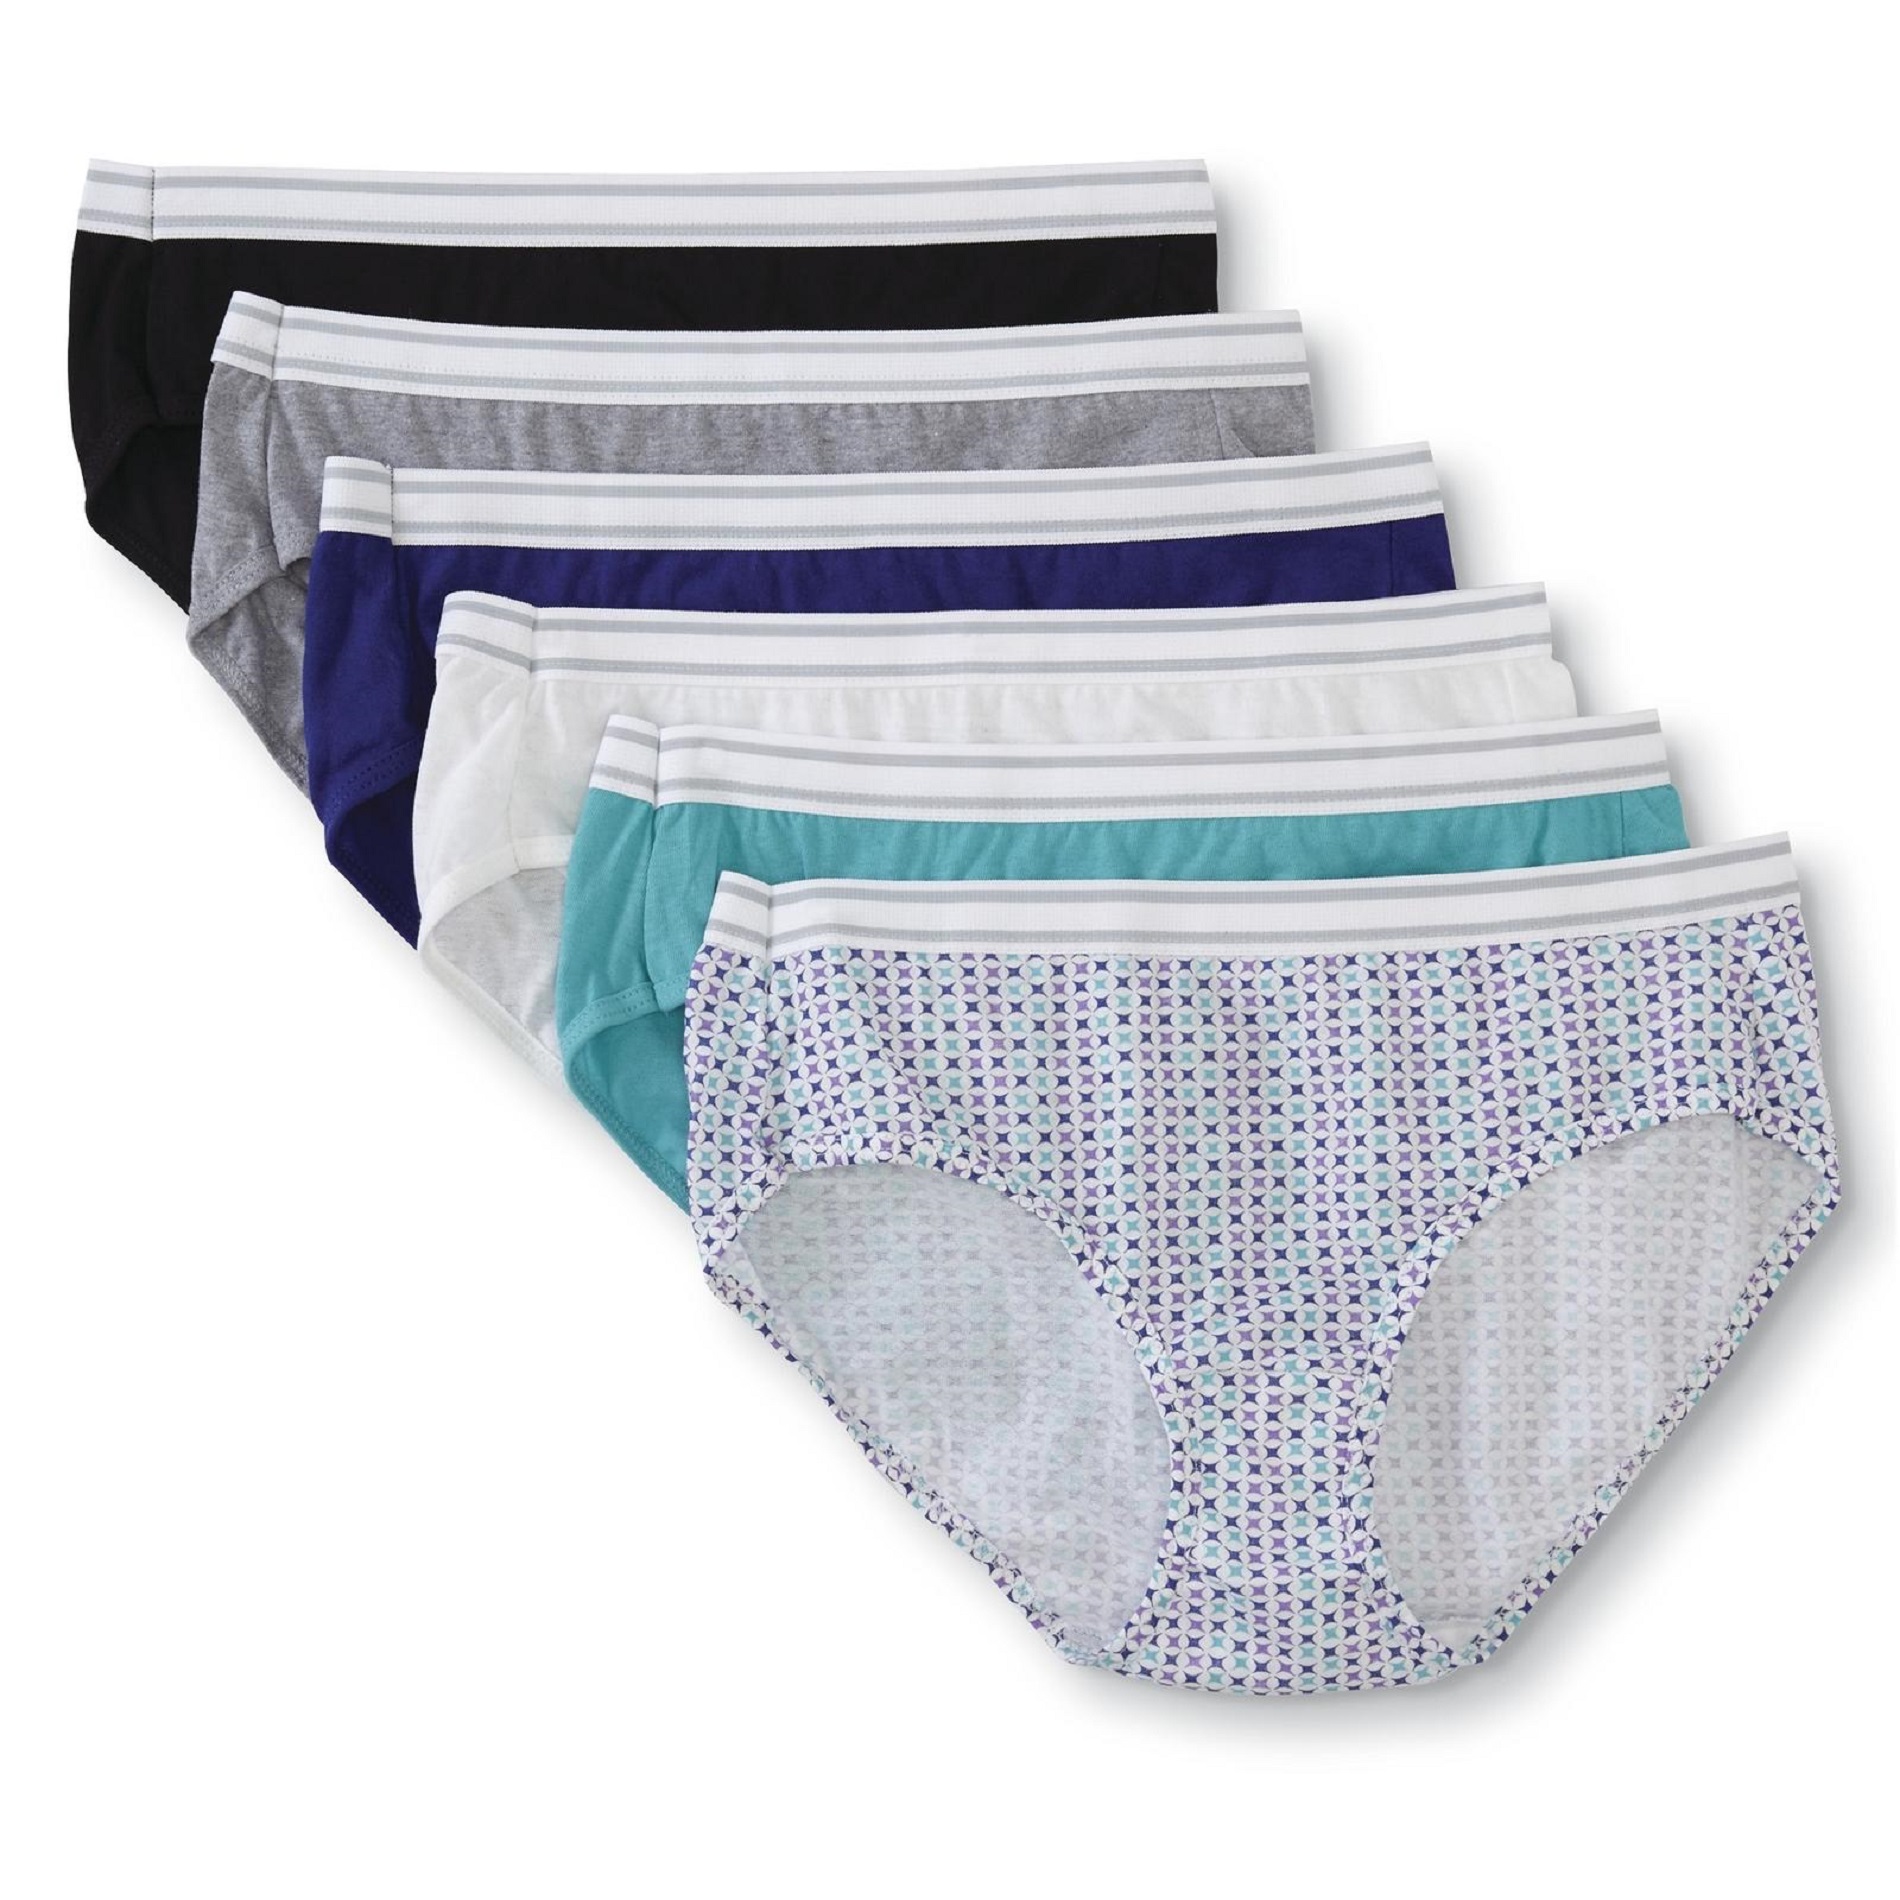 Hanes Women's 6-Pack Cotton Hipster Panties - PP41SC